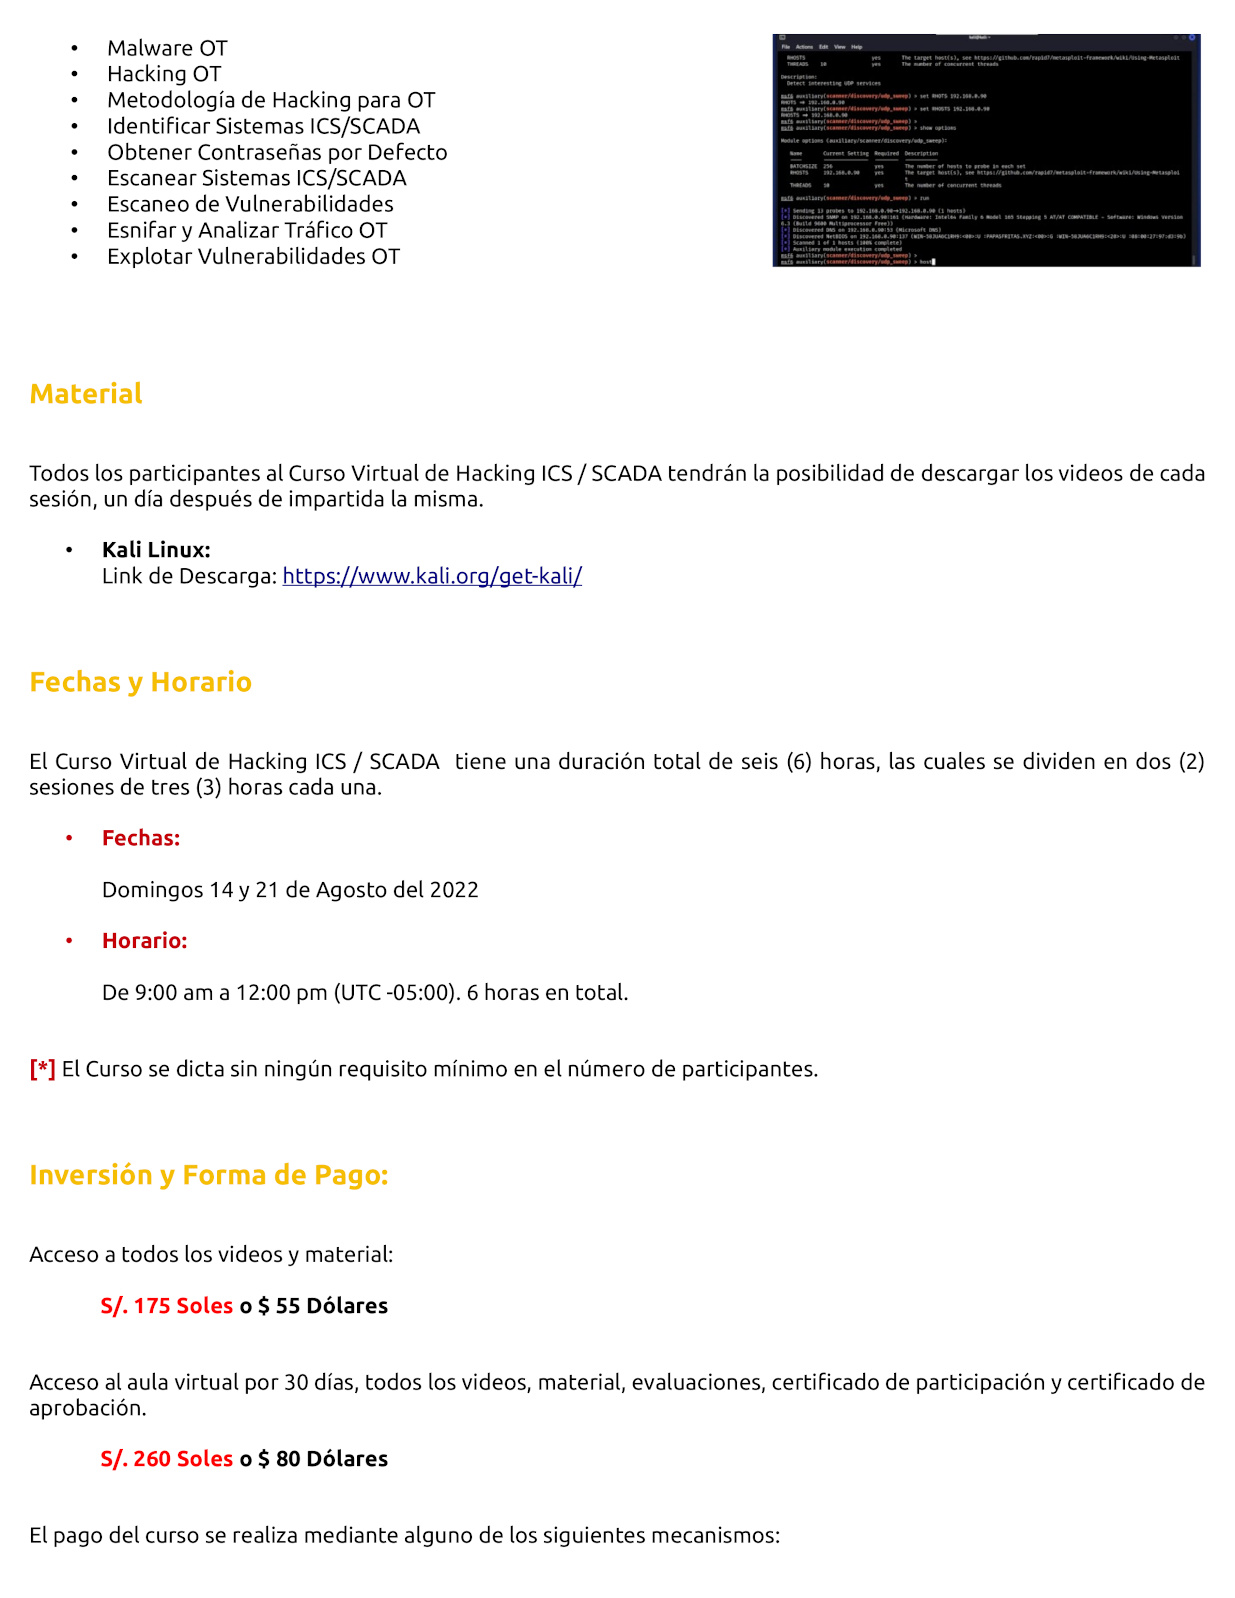 Único Curso Virtual de Hacking ICS / SCADA 2022